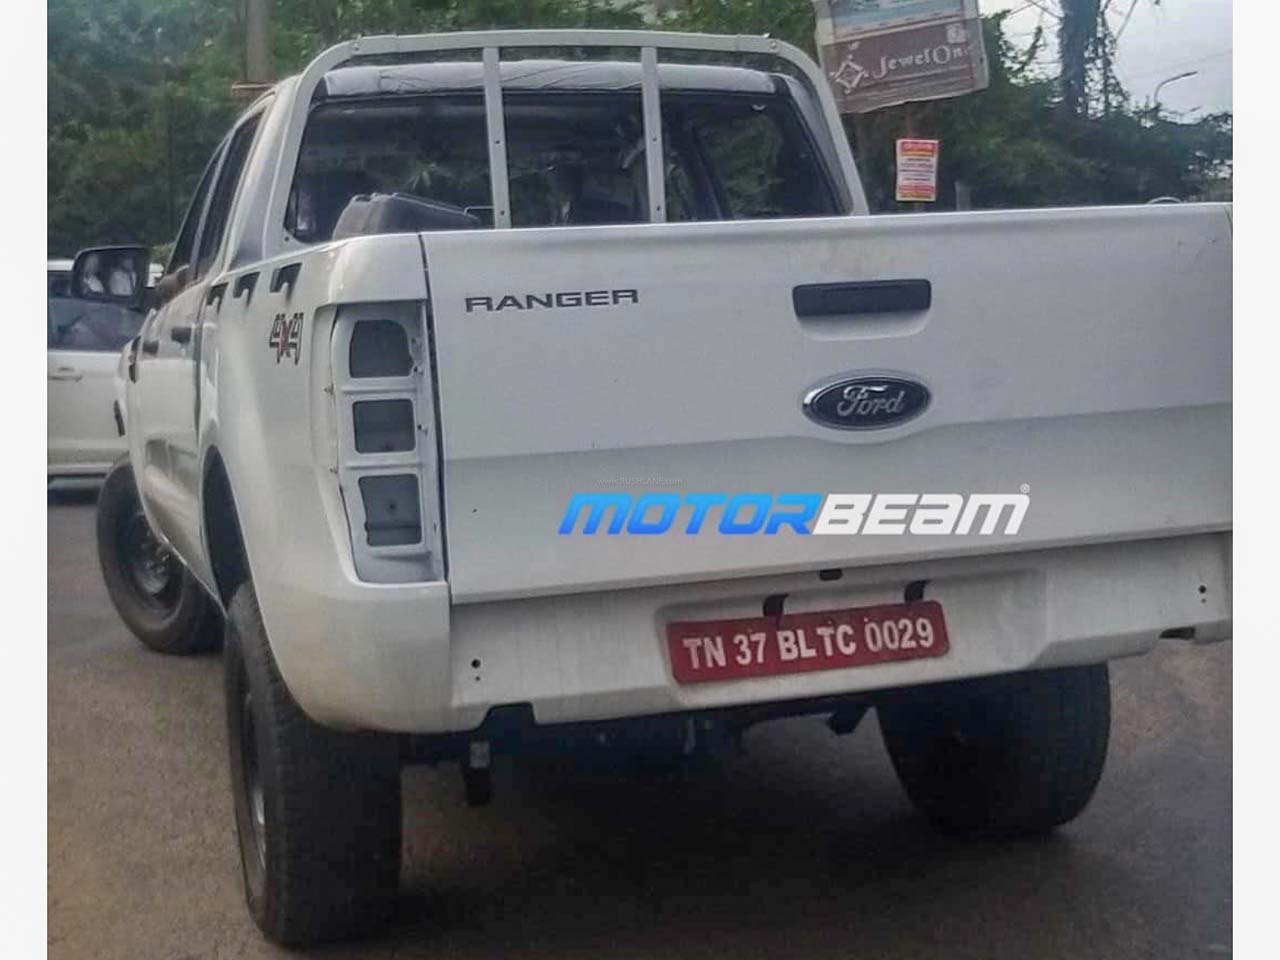 Ford Ranger 4x4 Pickup Truck Spied In India Isuzu V Cross Rival